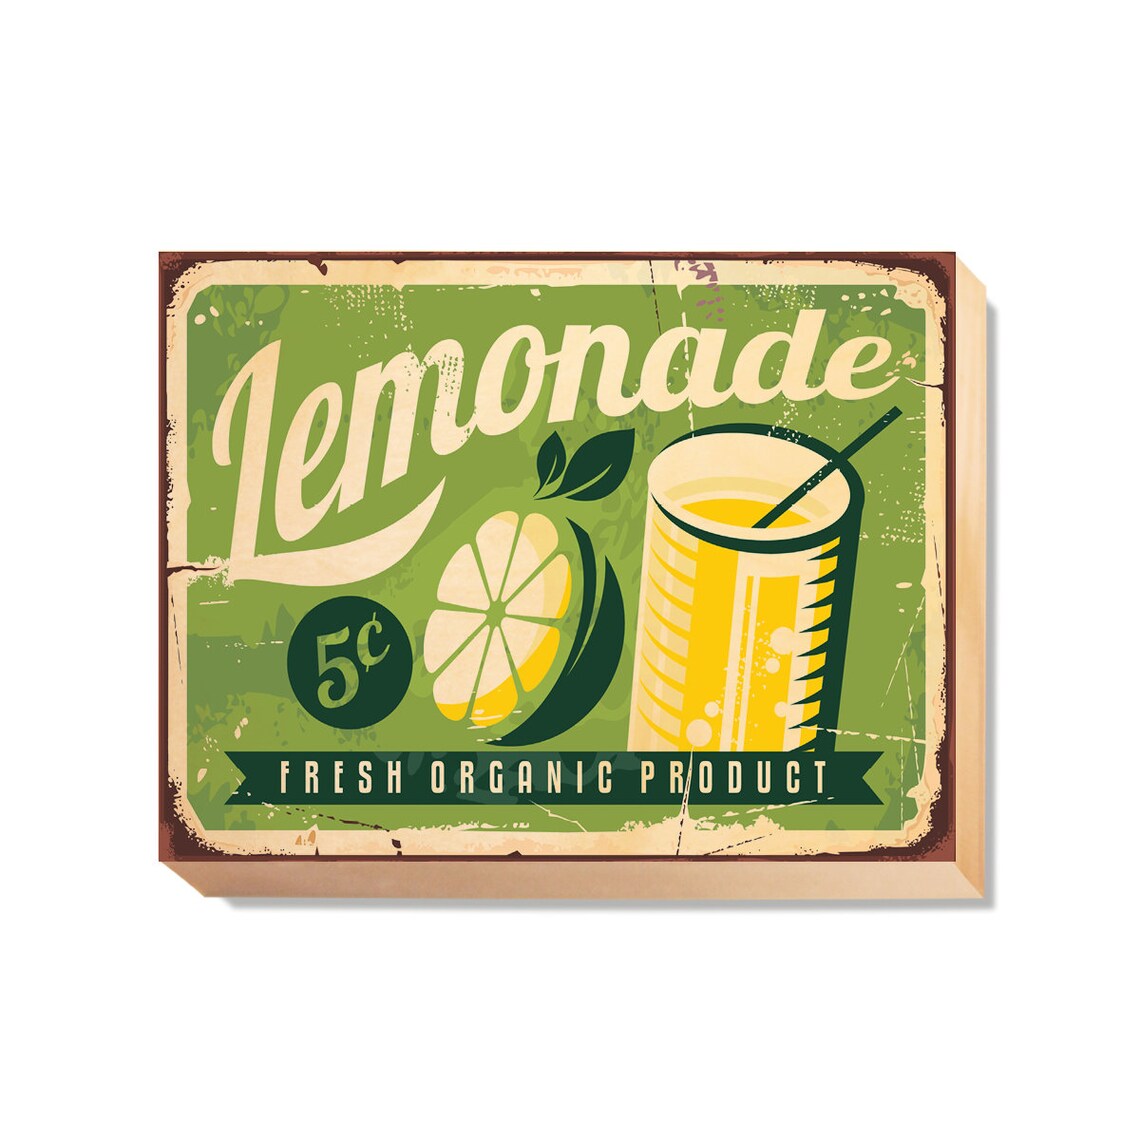 Lemonade 5 Cents Fresh Organic Product Home Decor Art Print On Etsy 